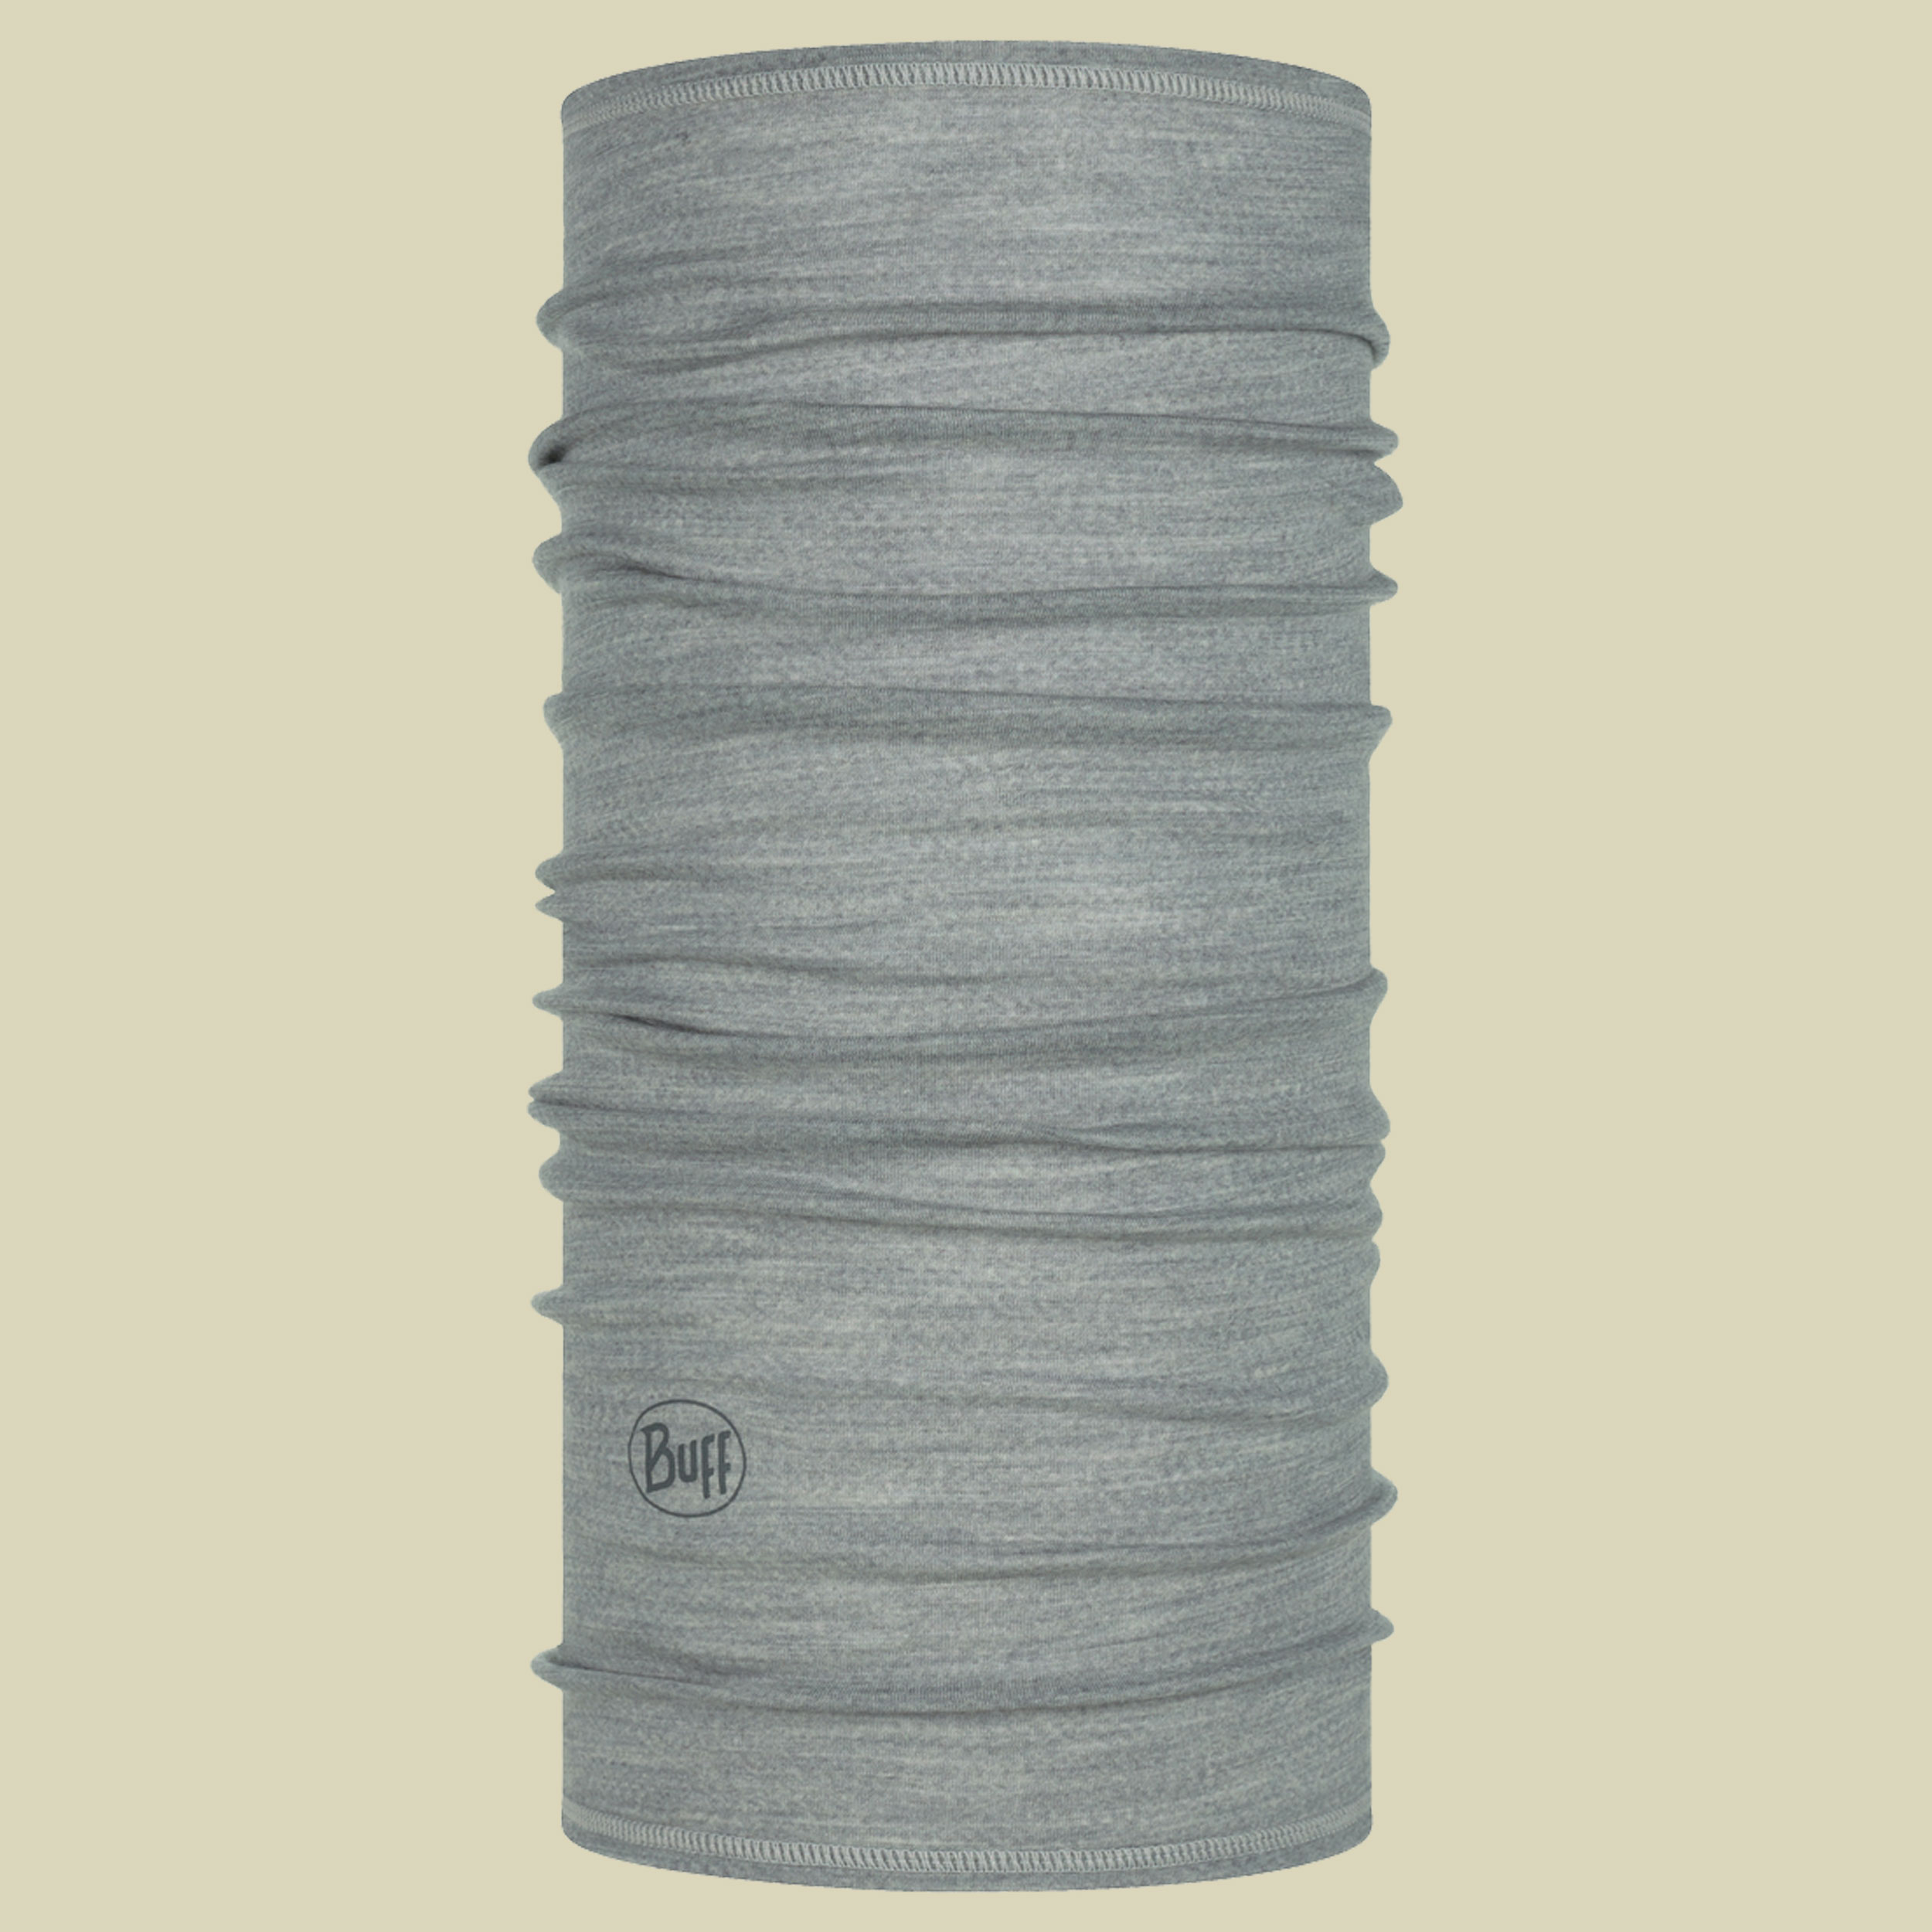 Lightweight Merino Wool Solid Größe one size Farbe solid light grey